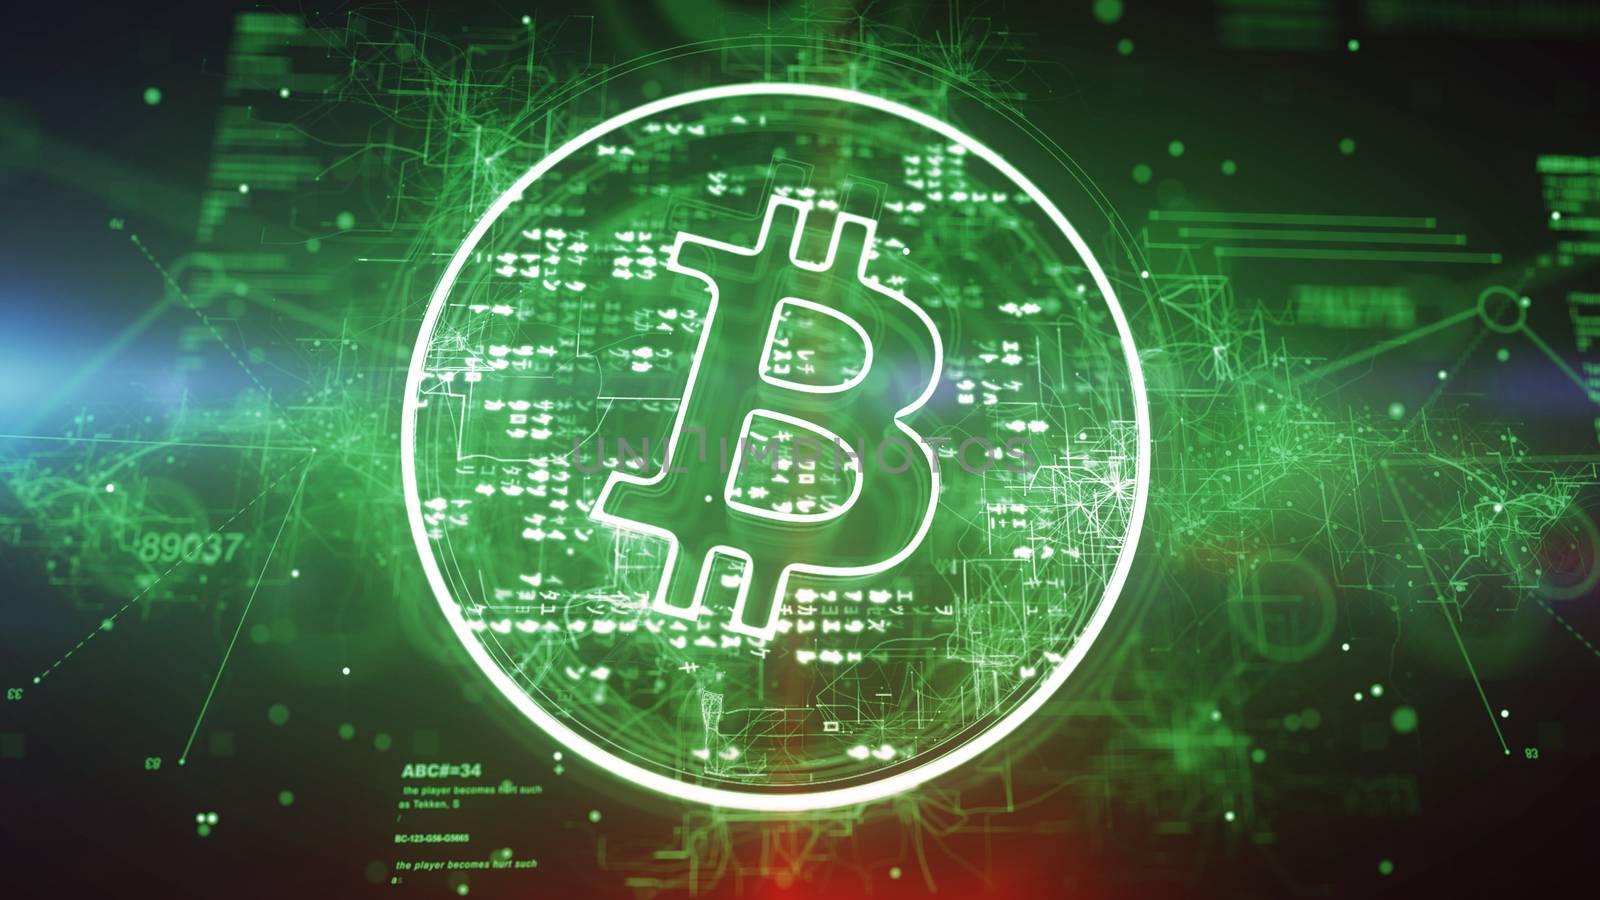 Advanced Bitcoin in Green Circle by klss